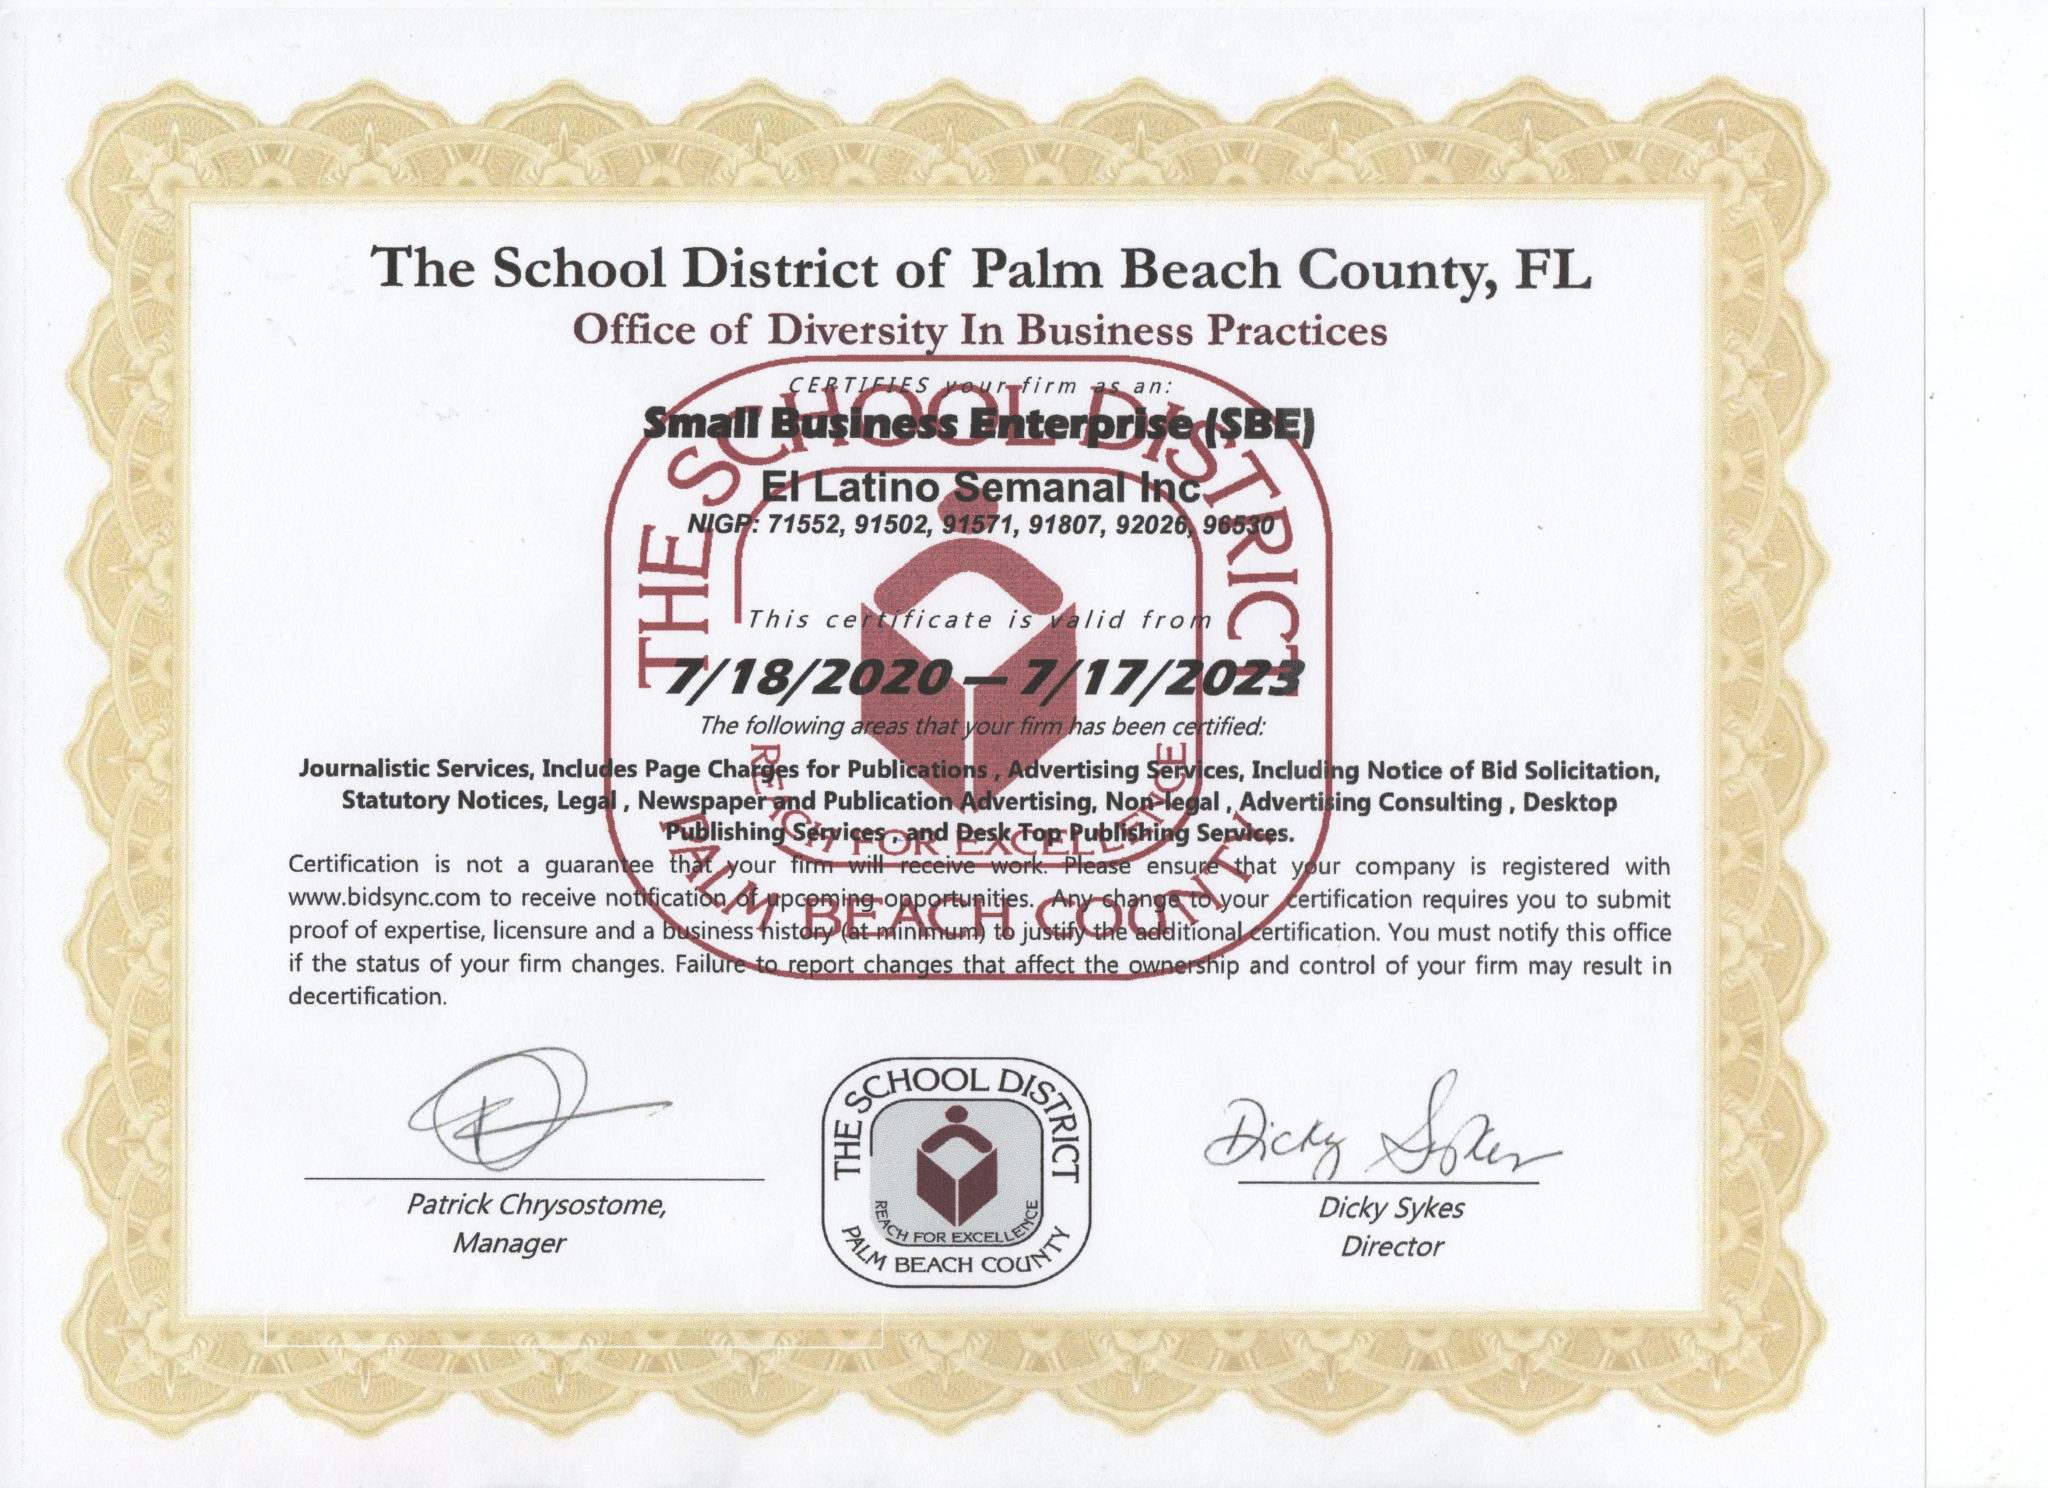 Palm Beach County Minority Business Vendor Certificate El Latino Digital